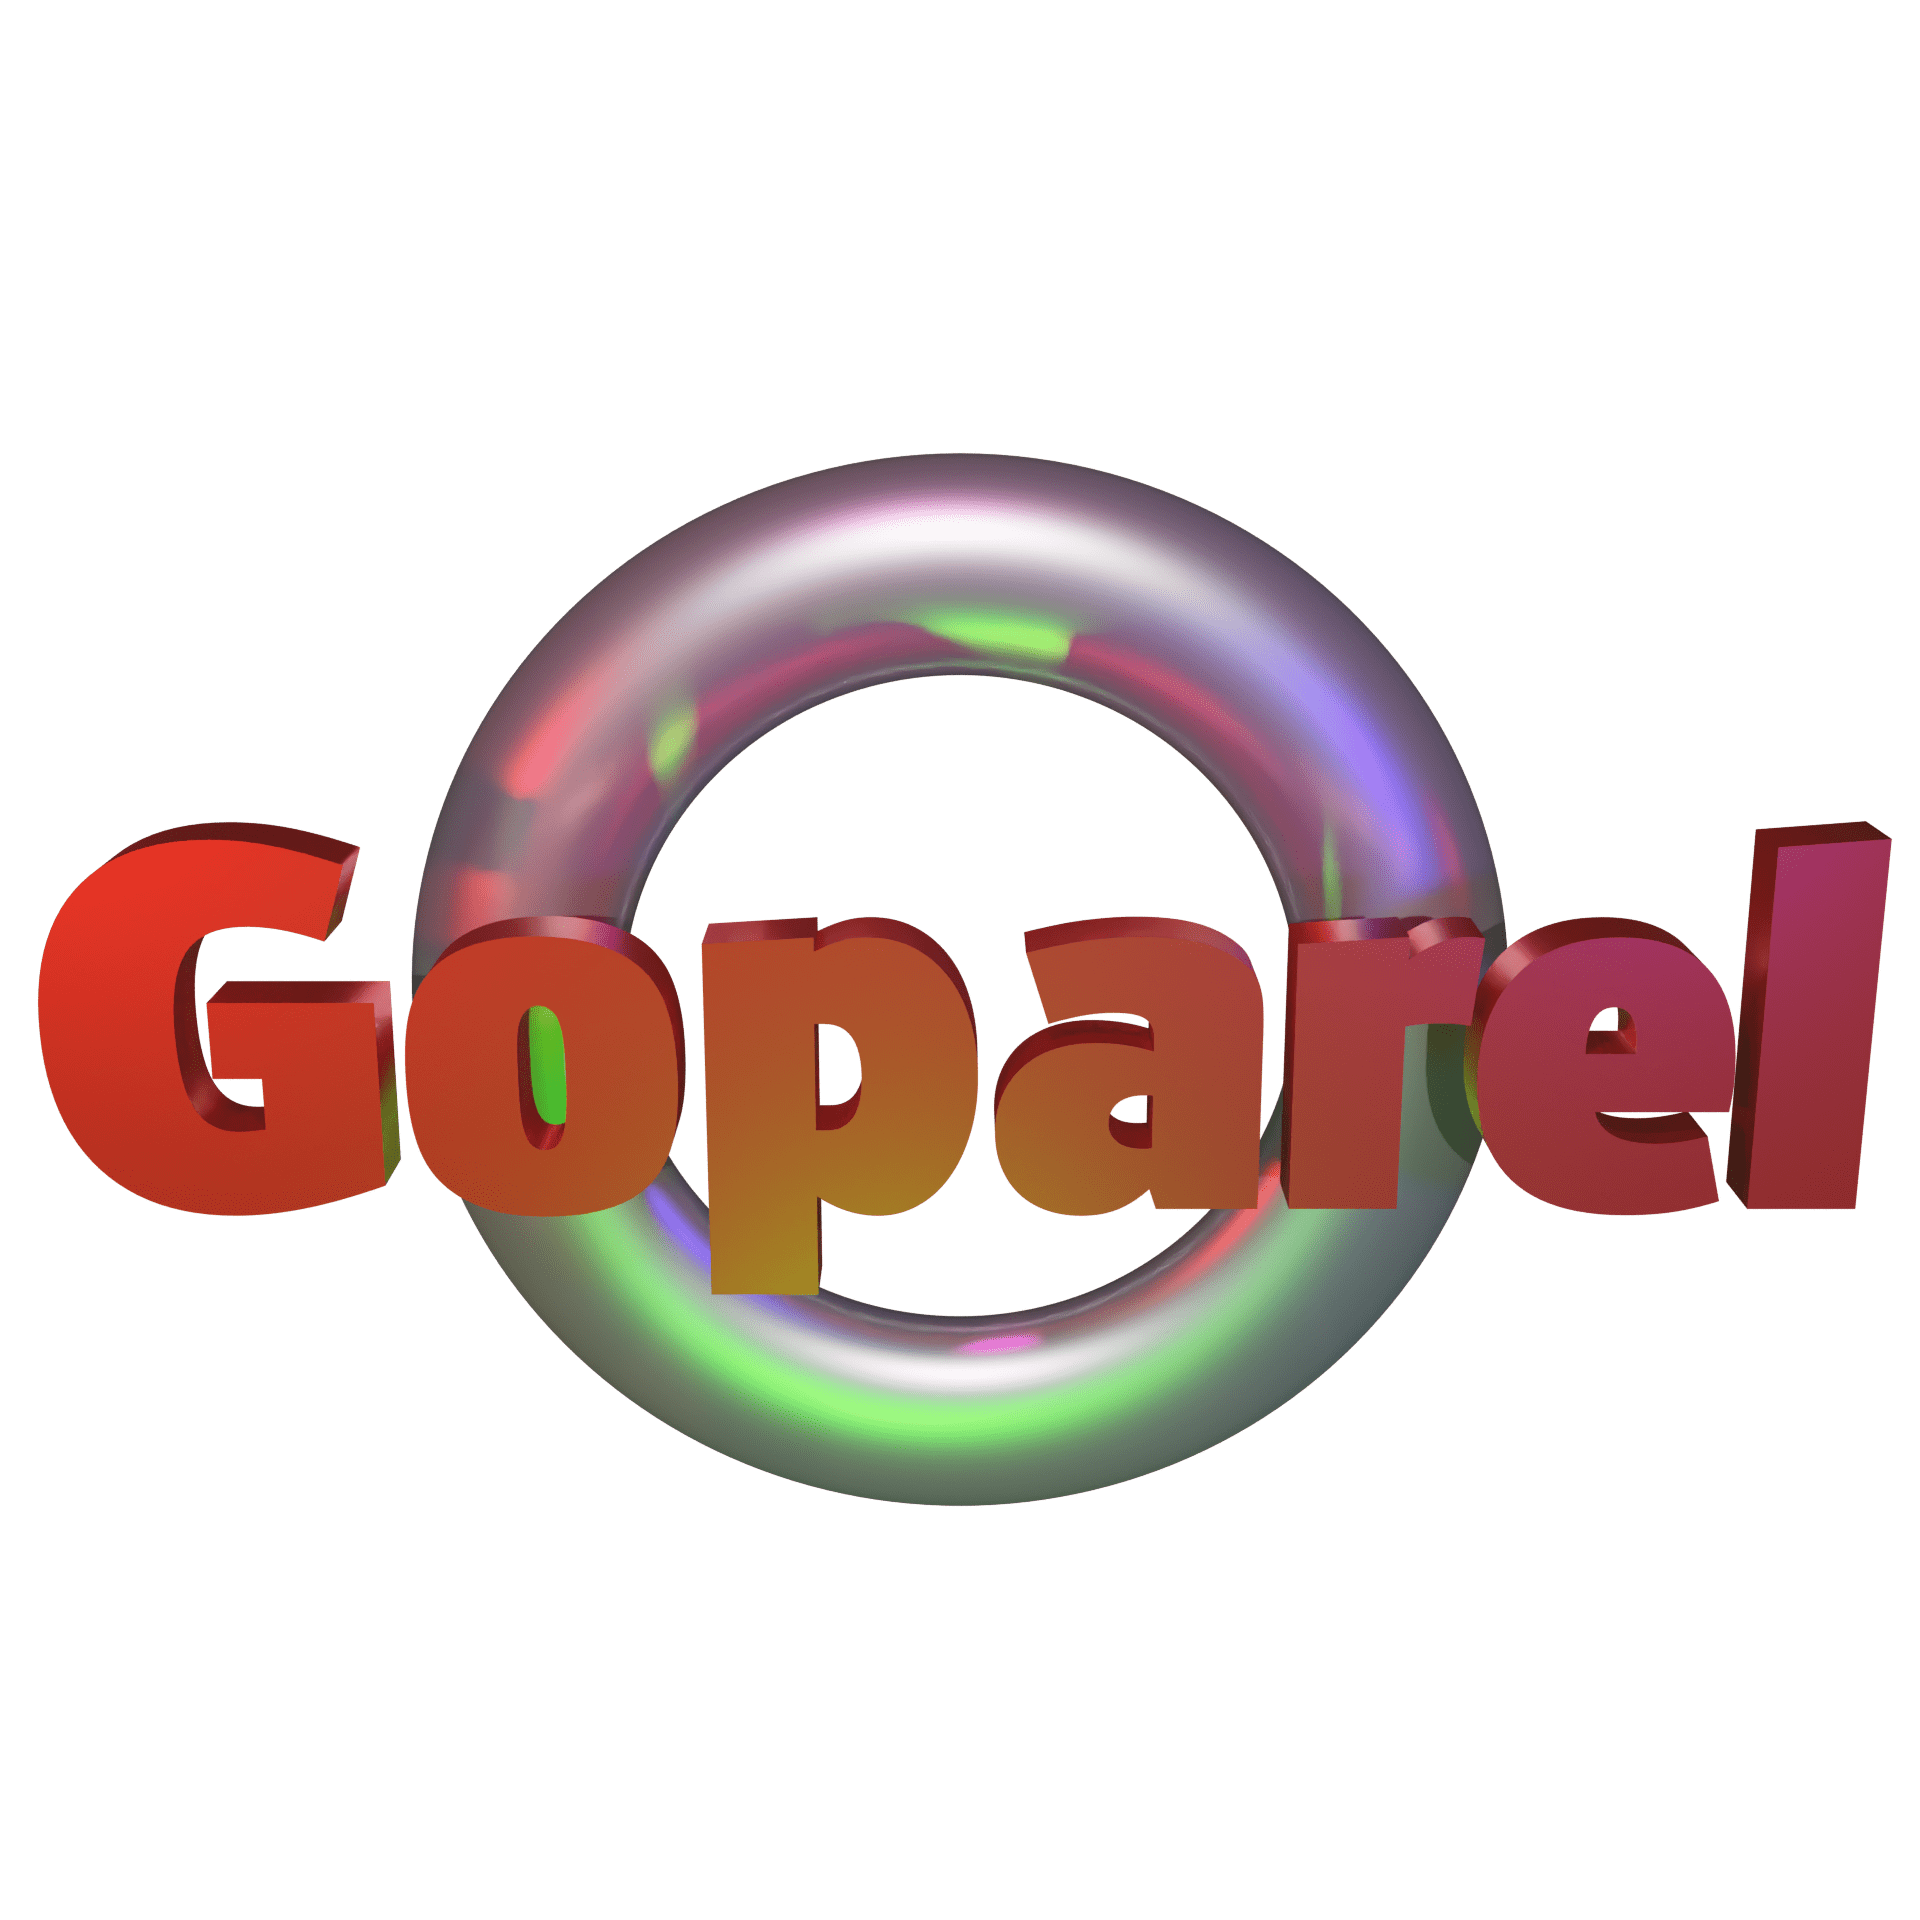 Goparel Printing